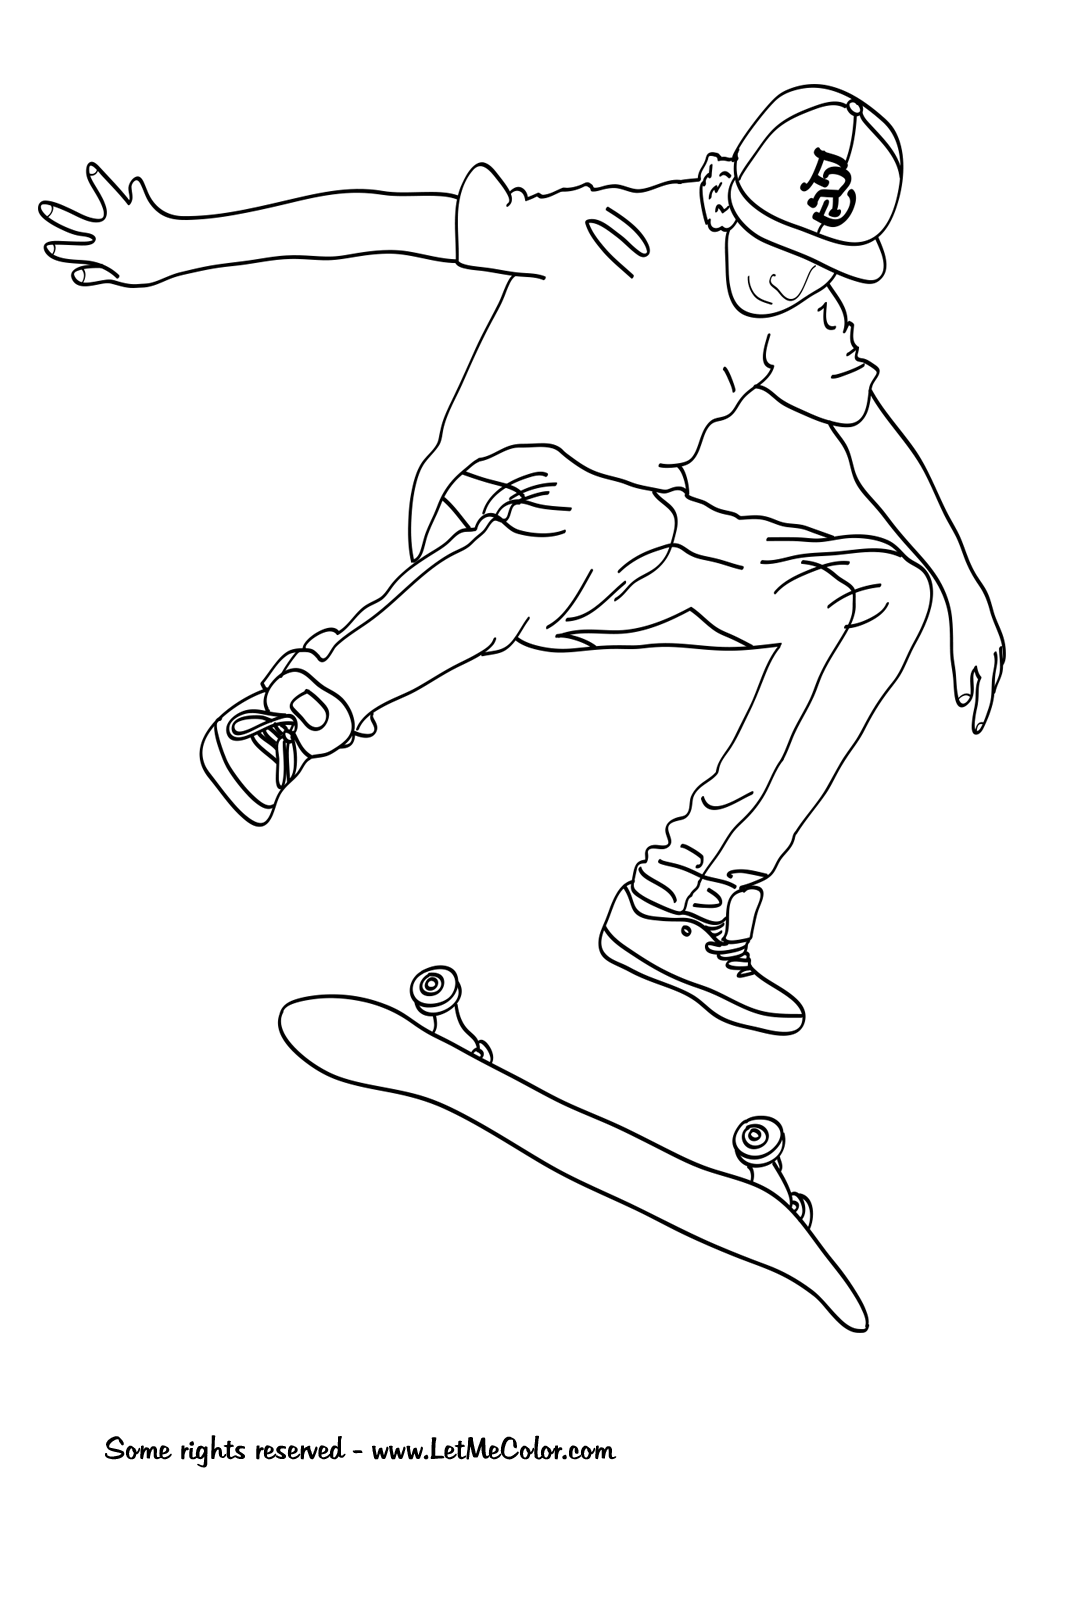 Dessin #16779 - Image de skateboard a colorier